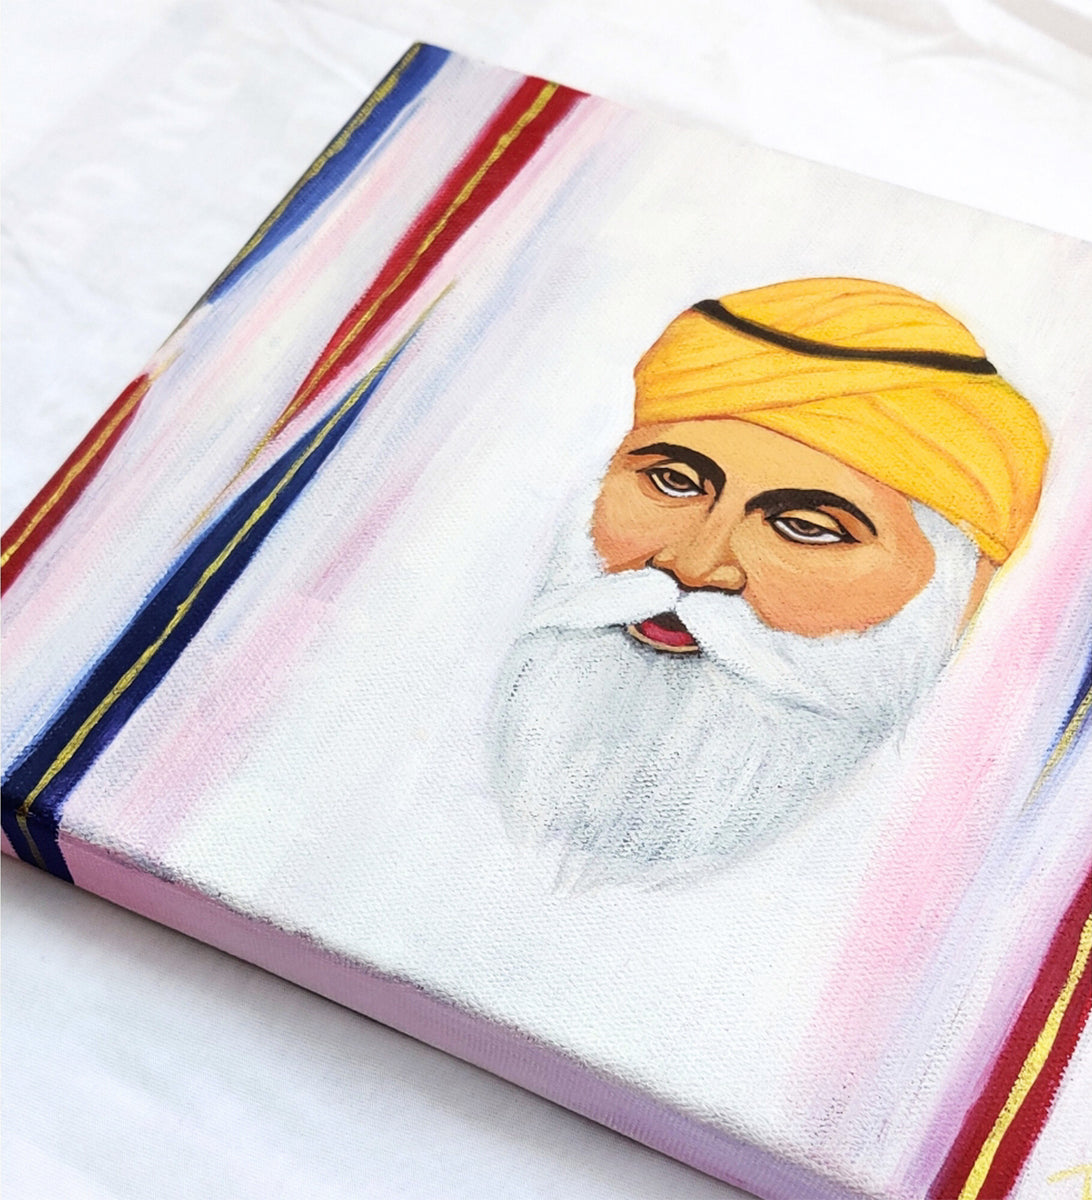 Guru Nanak Quotes: 10 profound quotes on life by Guru Nanak | Times of India